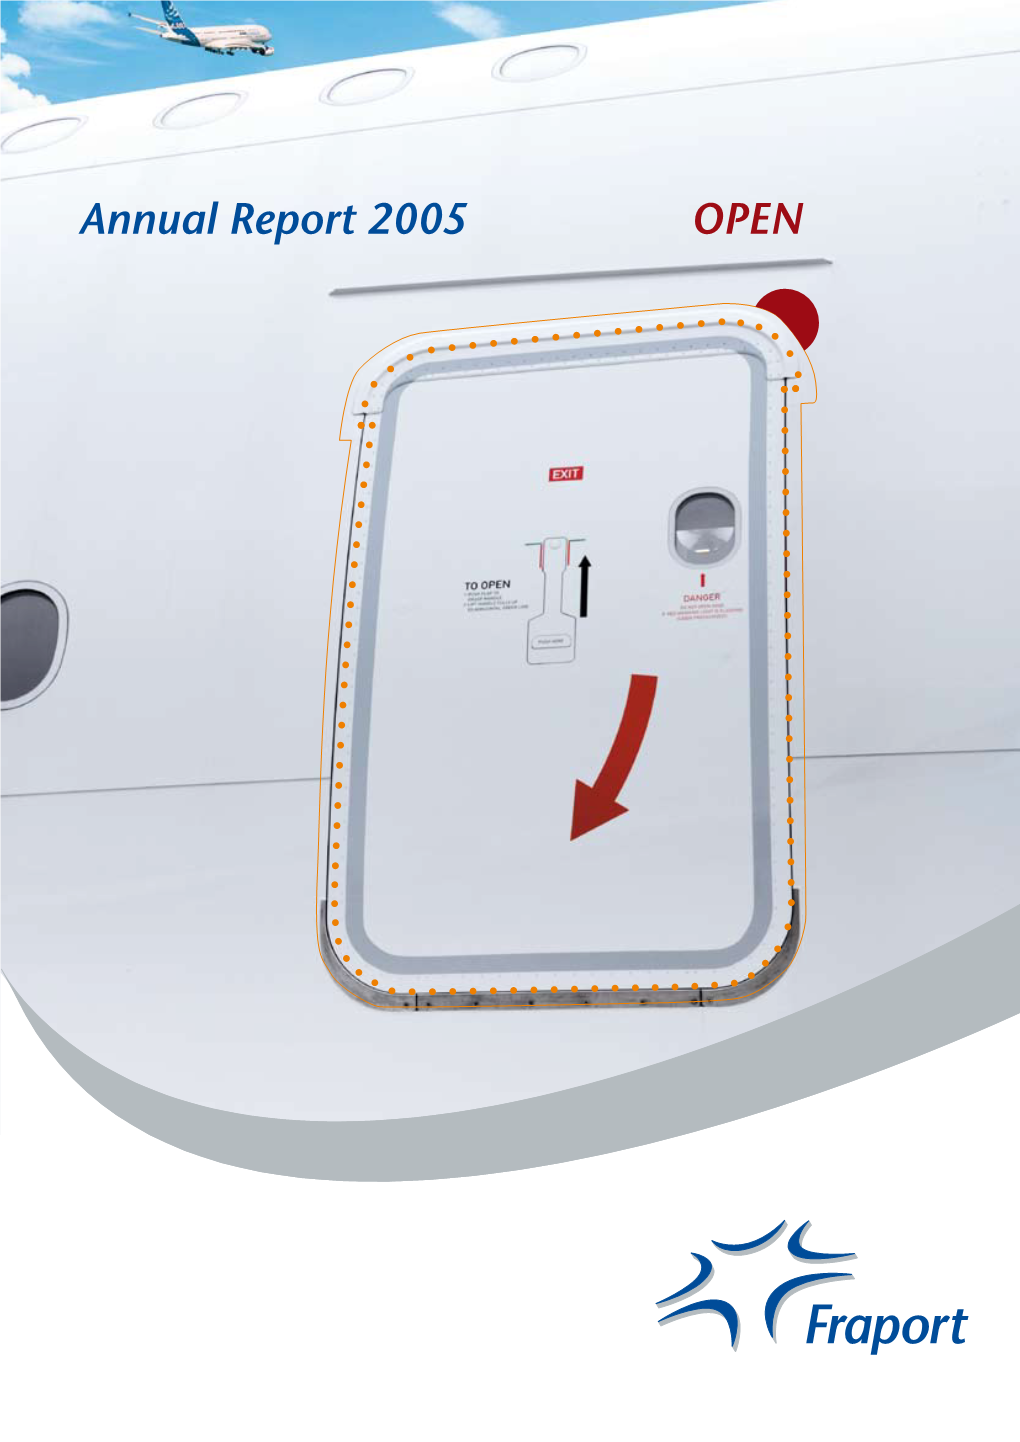 Annual Report 2005 OPEN Fraport